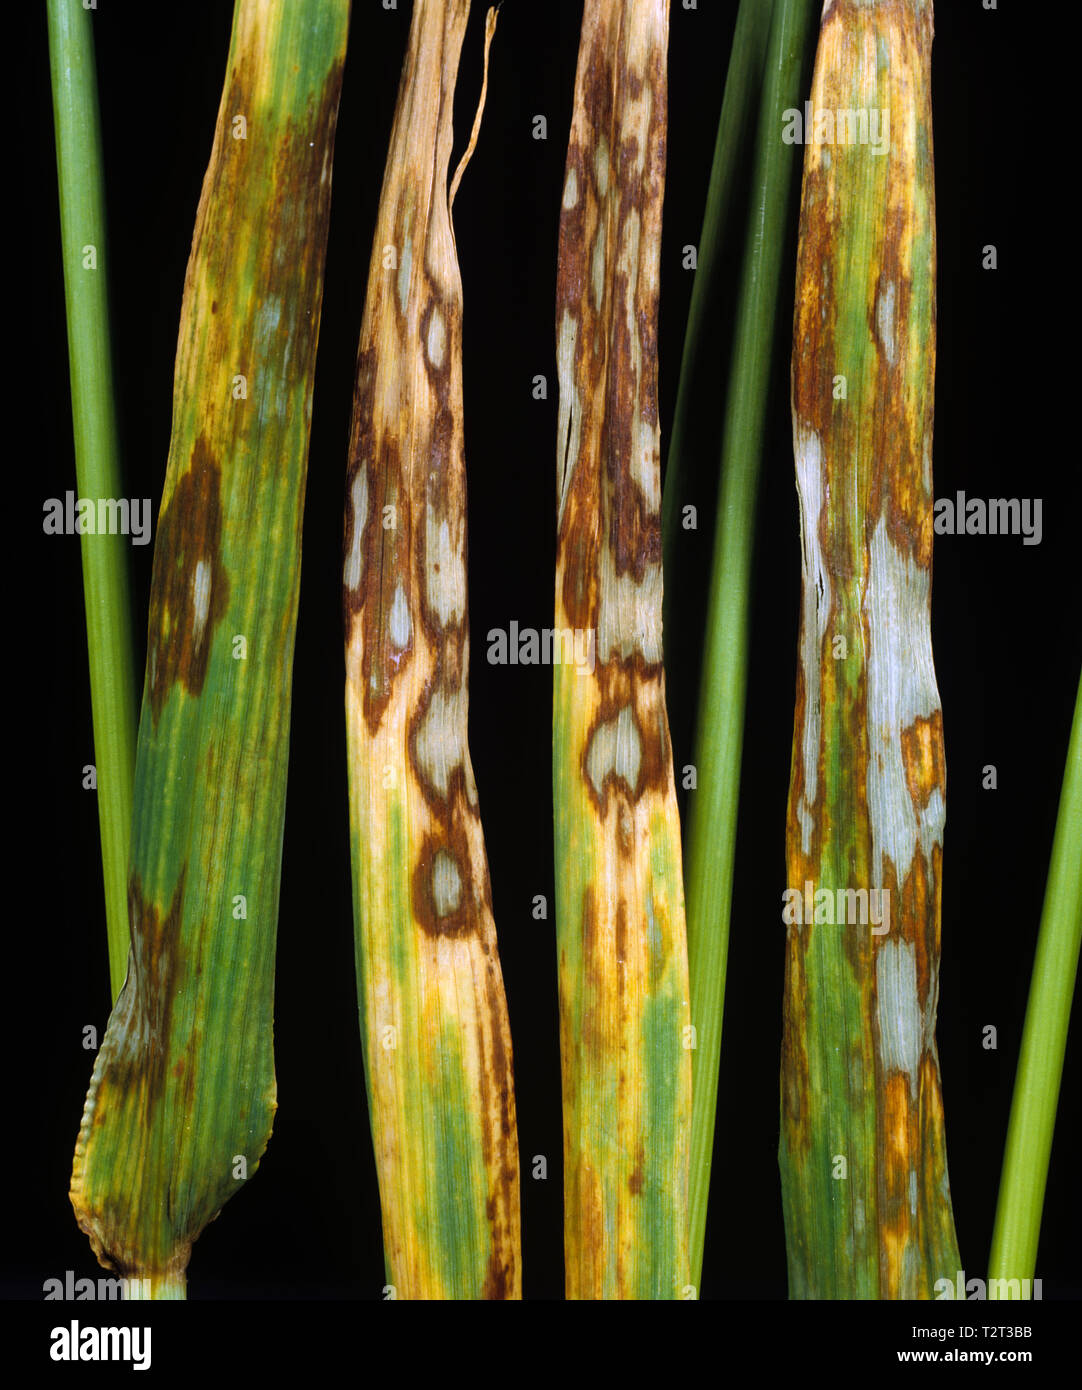 Barley leaf blotch or leaf scald (Rhynchosporium secalis) lesions of this serious fungal disease on barley leaves Stock Photo